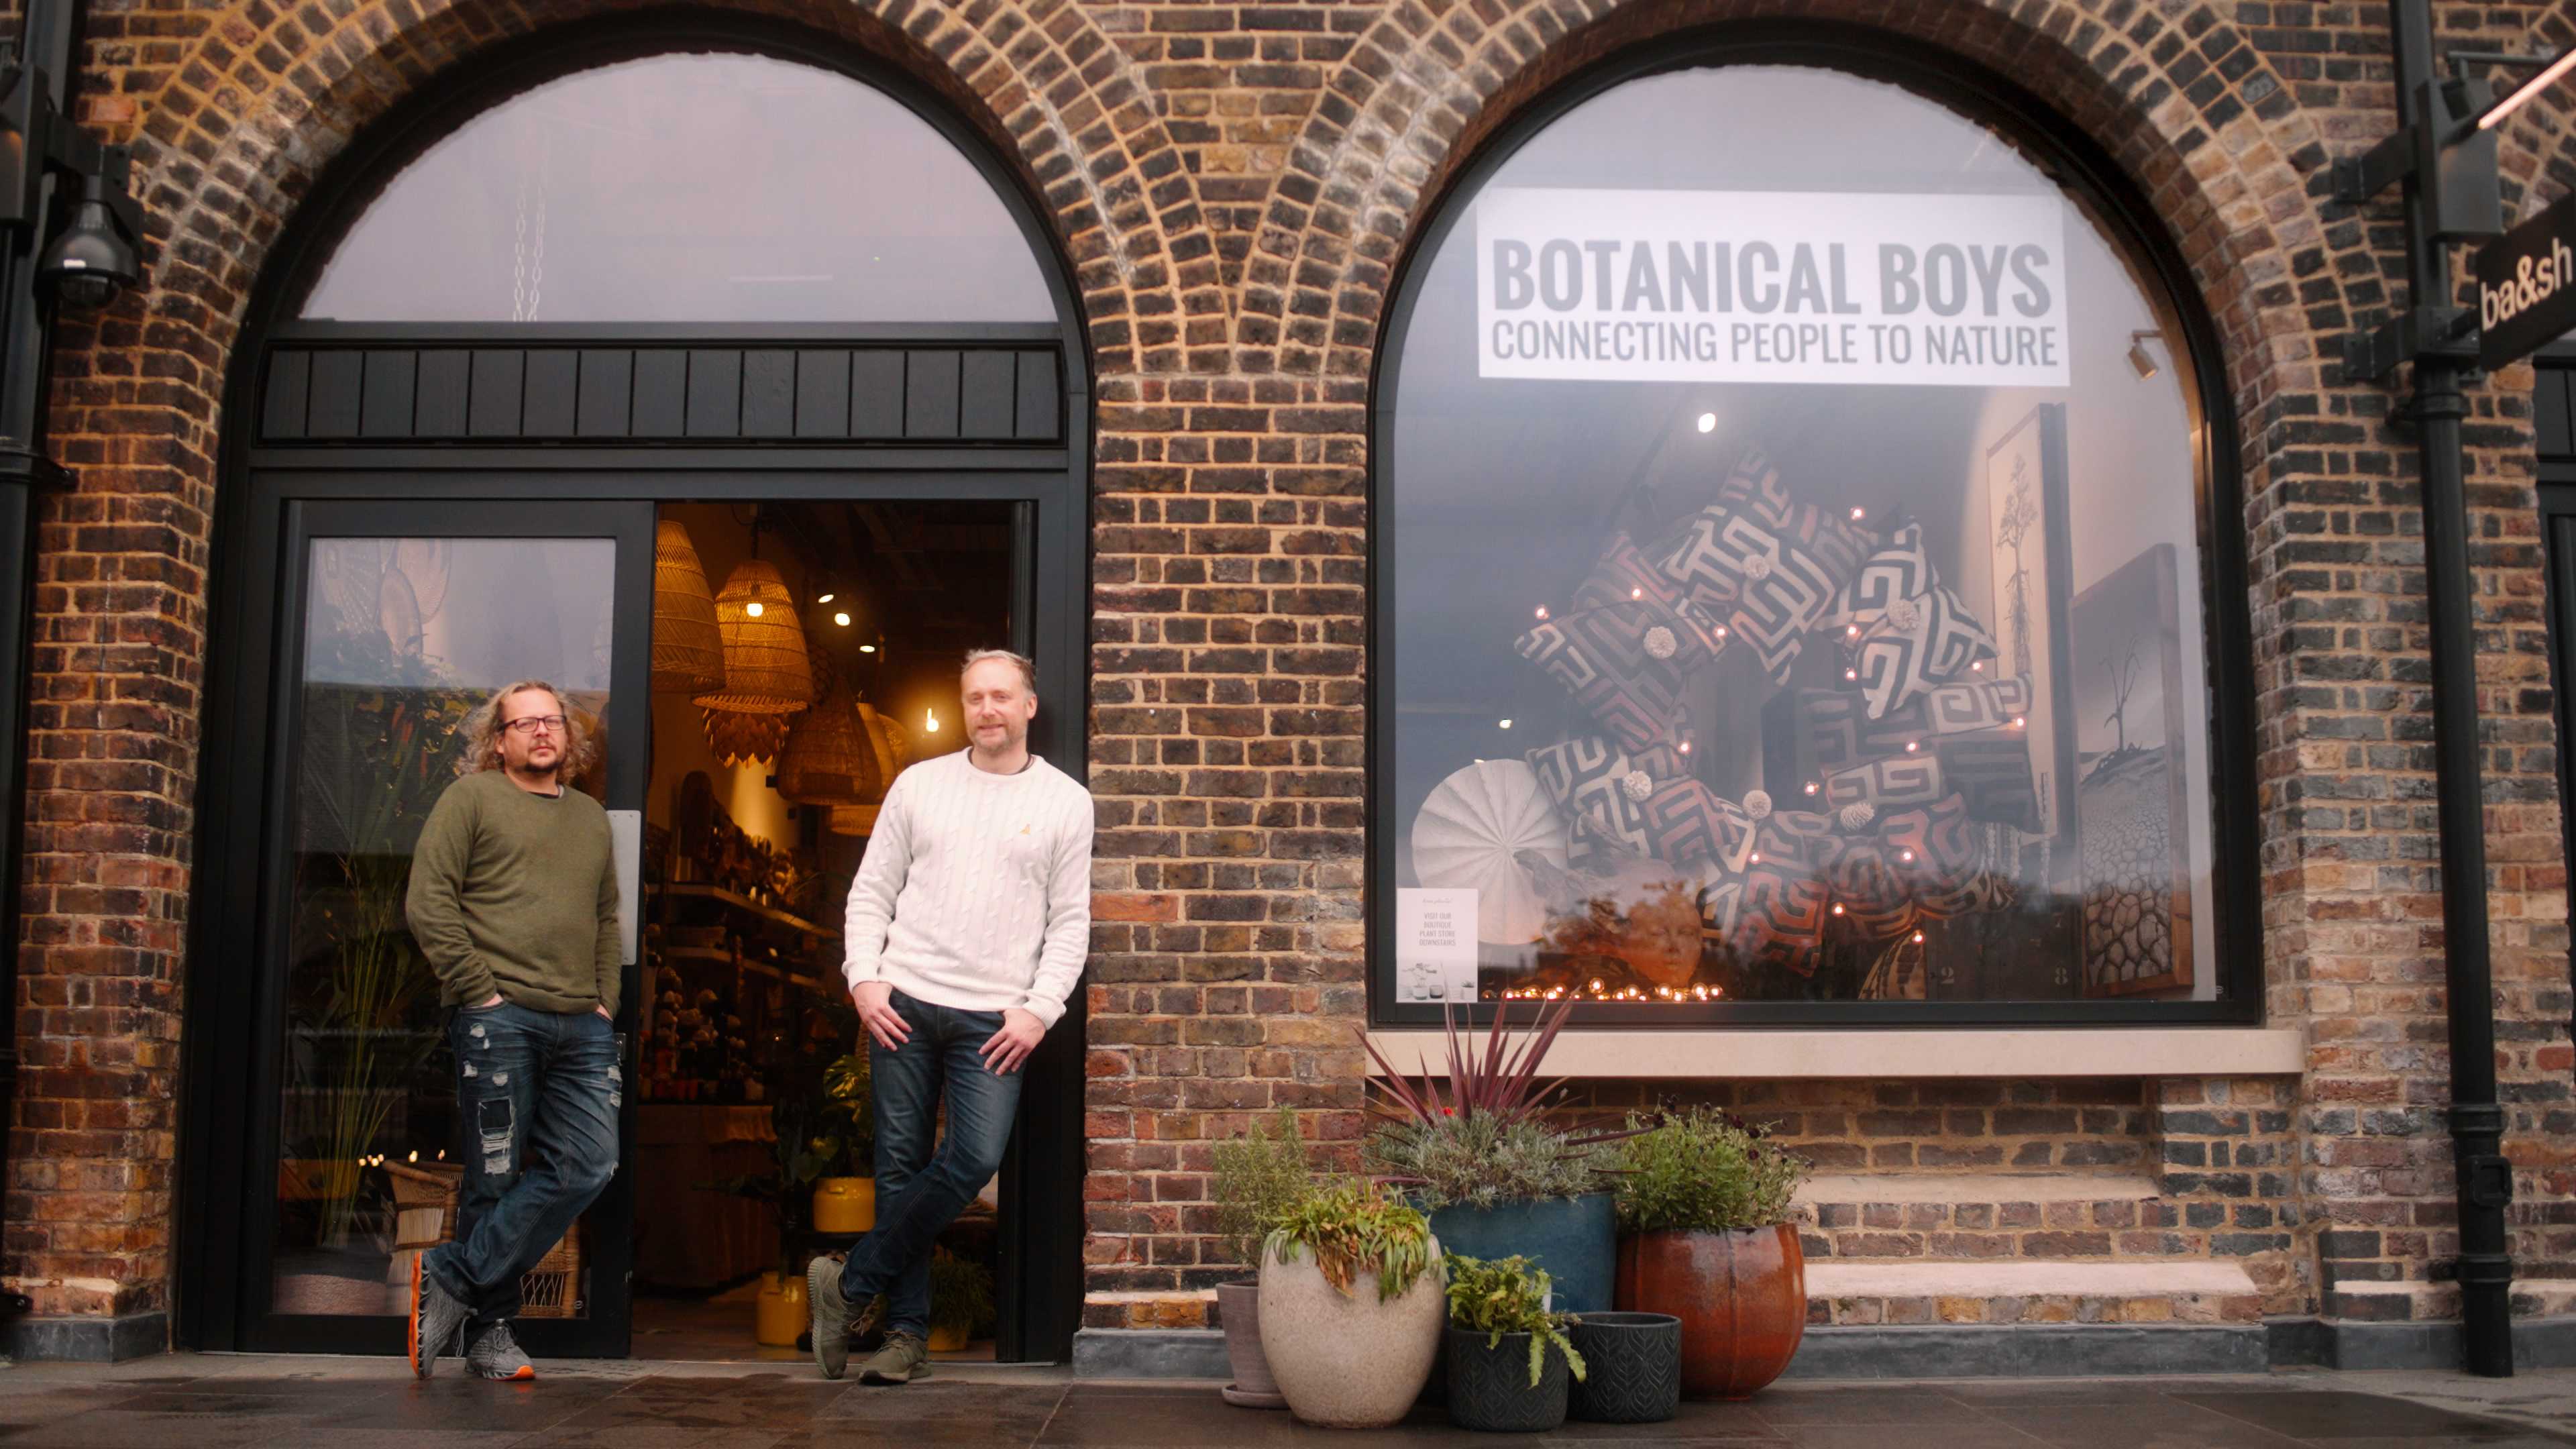 Botanical Boys